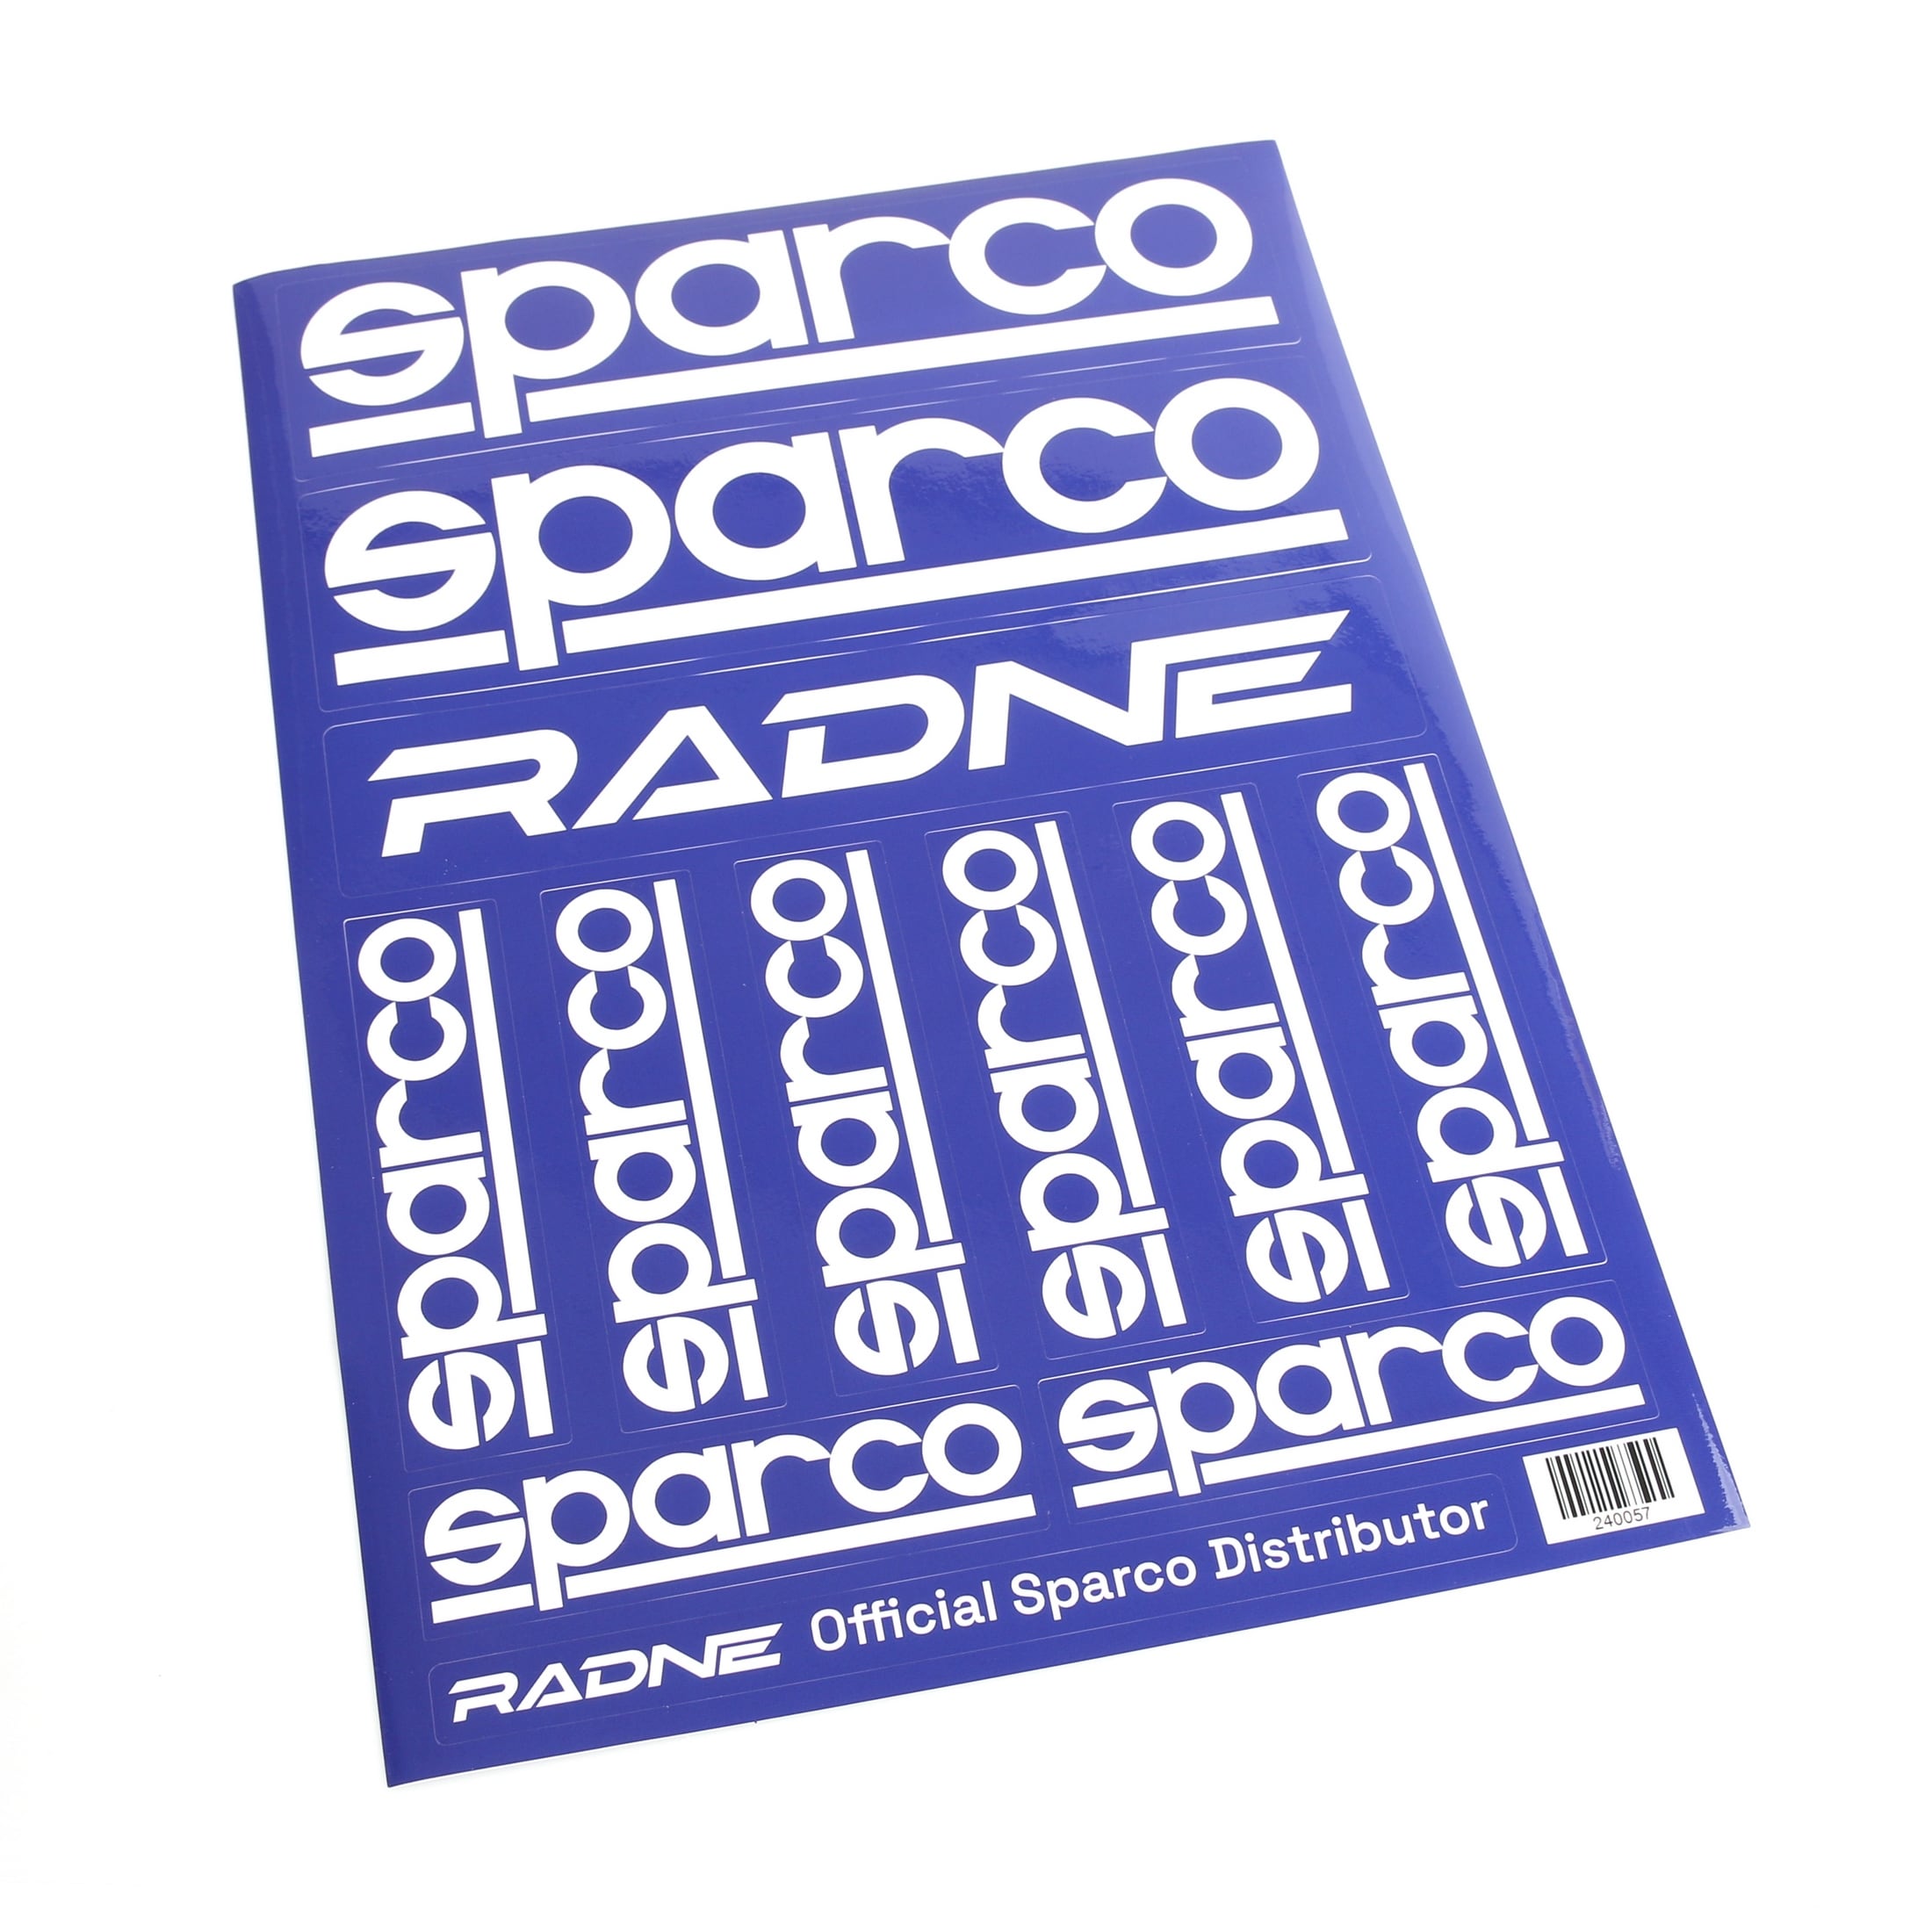 Tarrat Sparco Official